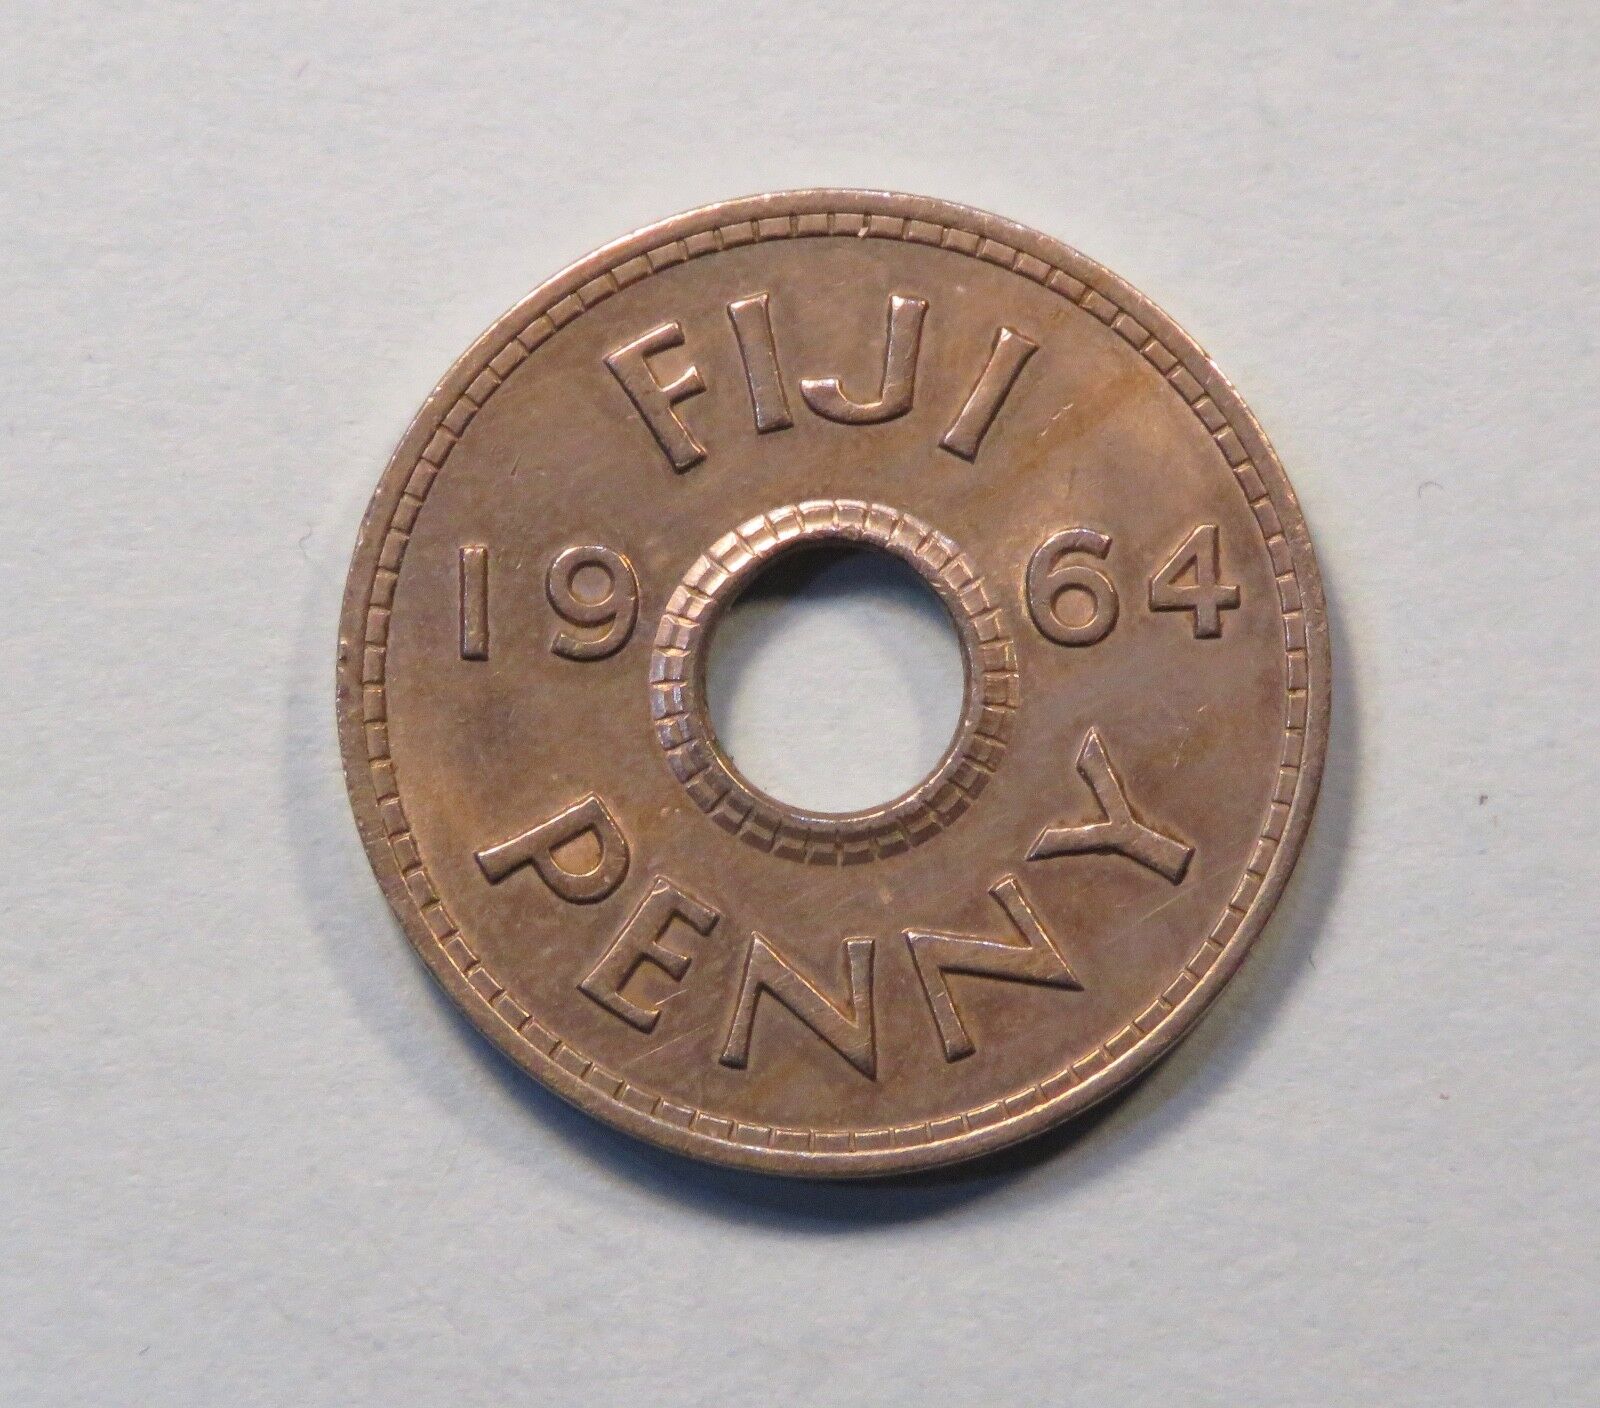 Fiji  Penny 1964 Copper Nickel World Coin  KM21 Queen Elizabeth II one cent